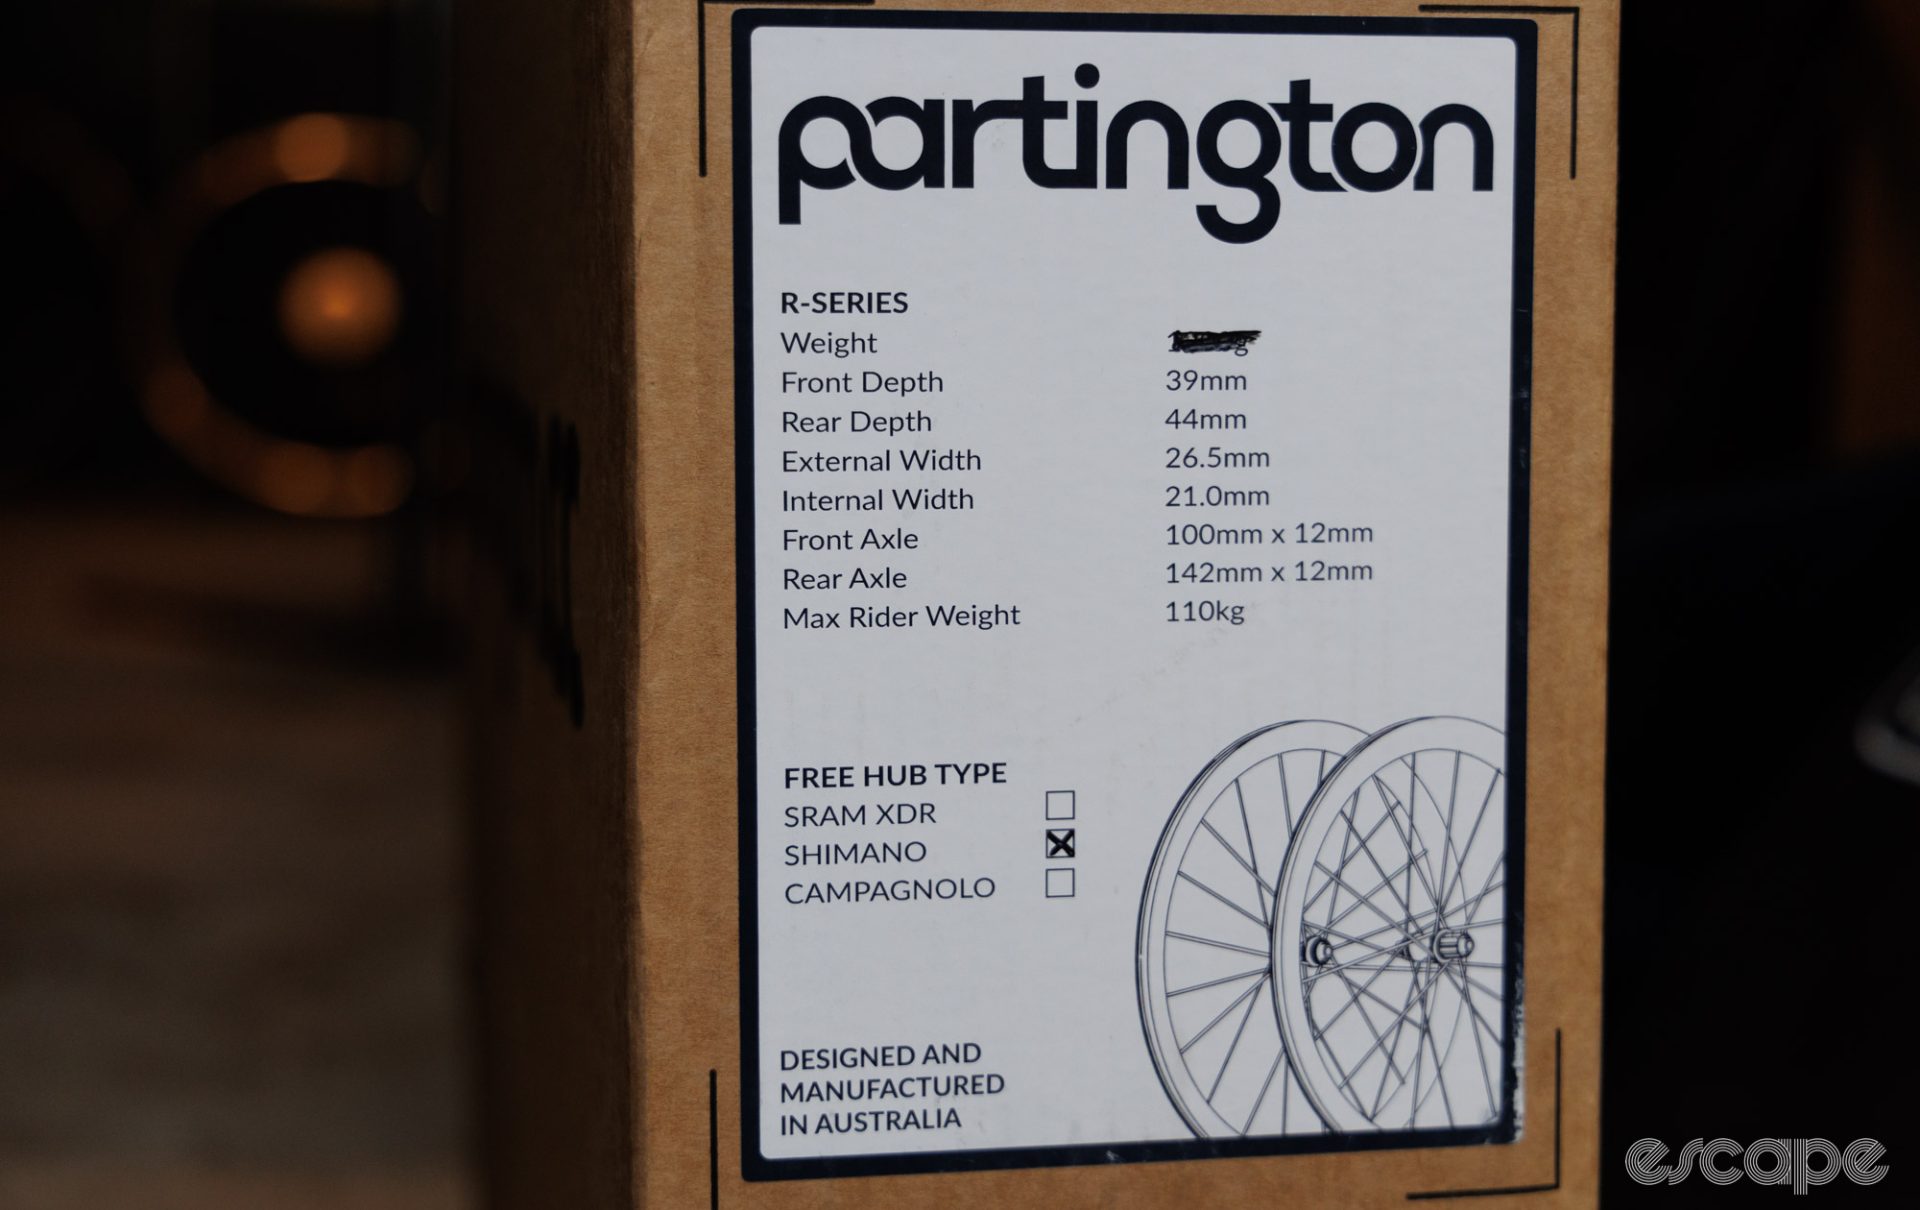 An image of the Partington cardboard box.